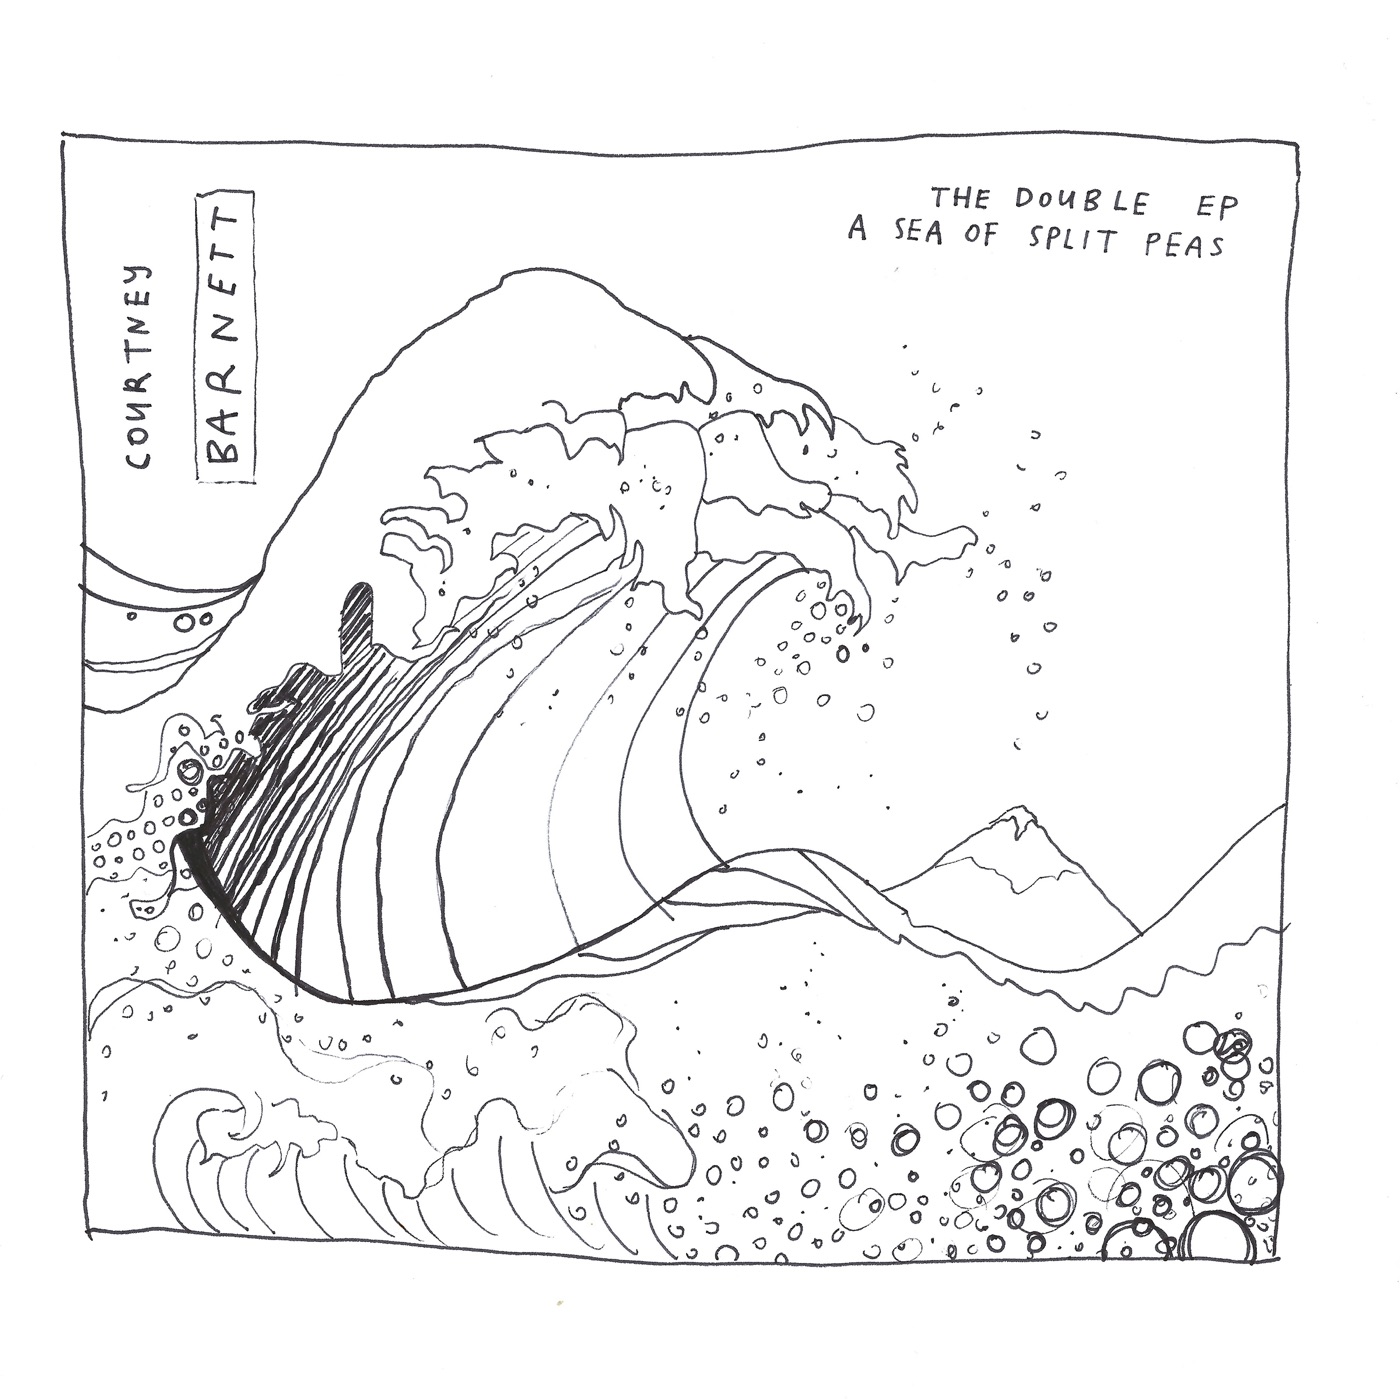 The Double EP: A Sea of Split Peas by Courtney Barnett